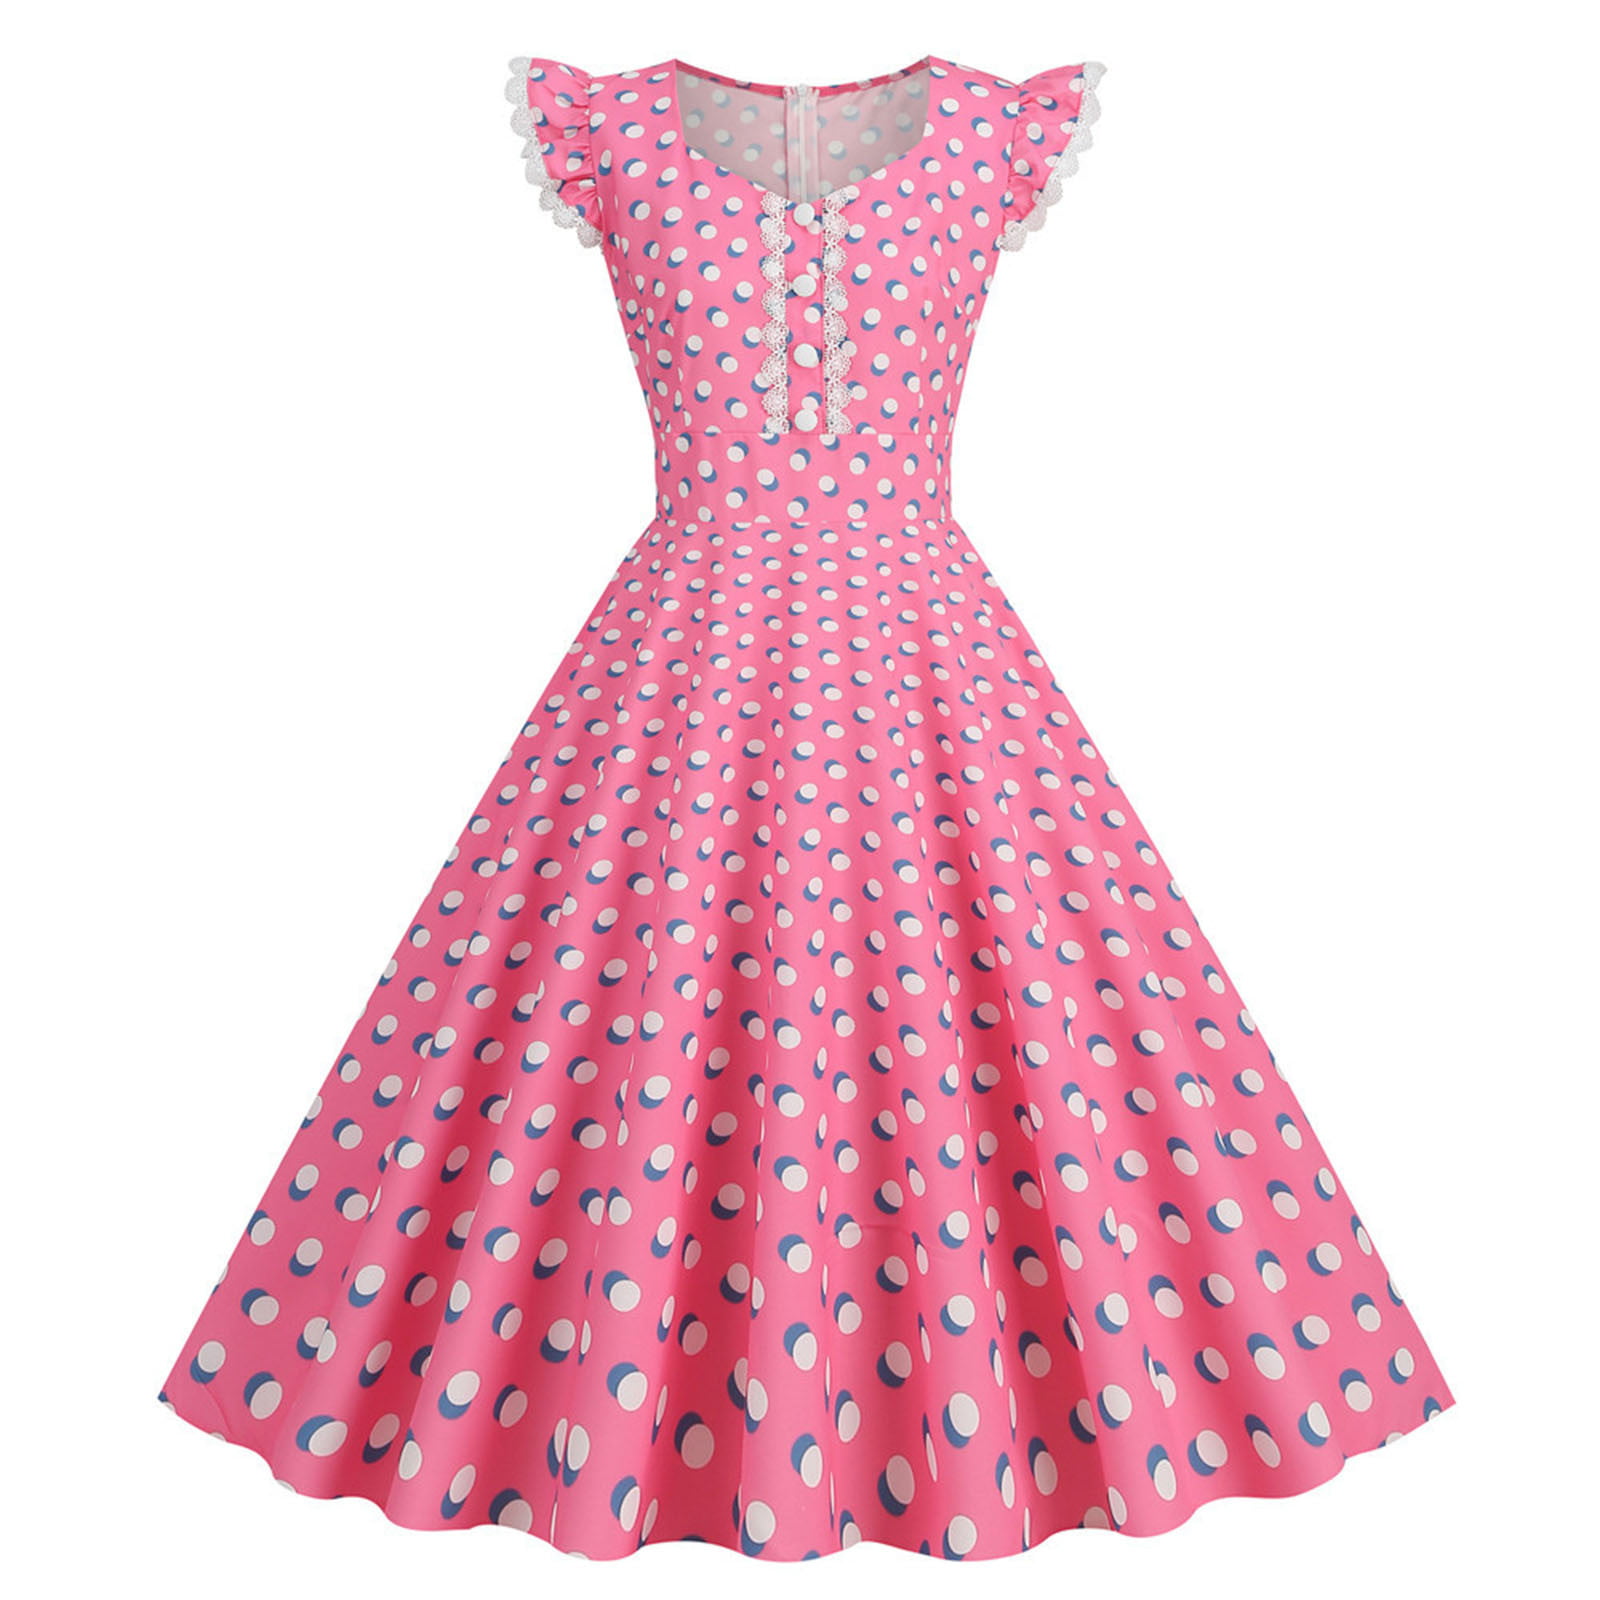 Gaiseeis Women's Fashion Lace Sleeve Vintage Polka Dot Printed Maxi Dress  Pink S